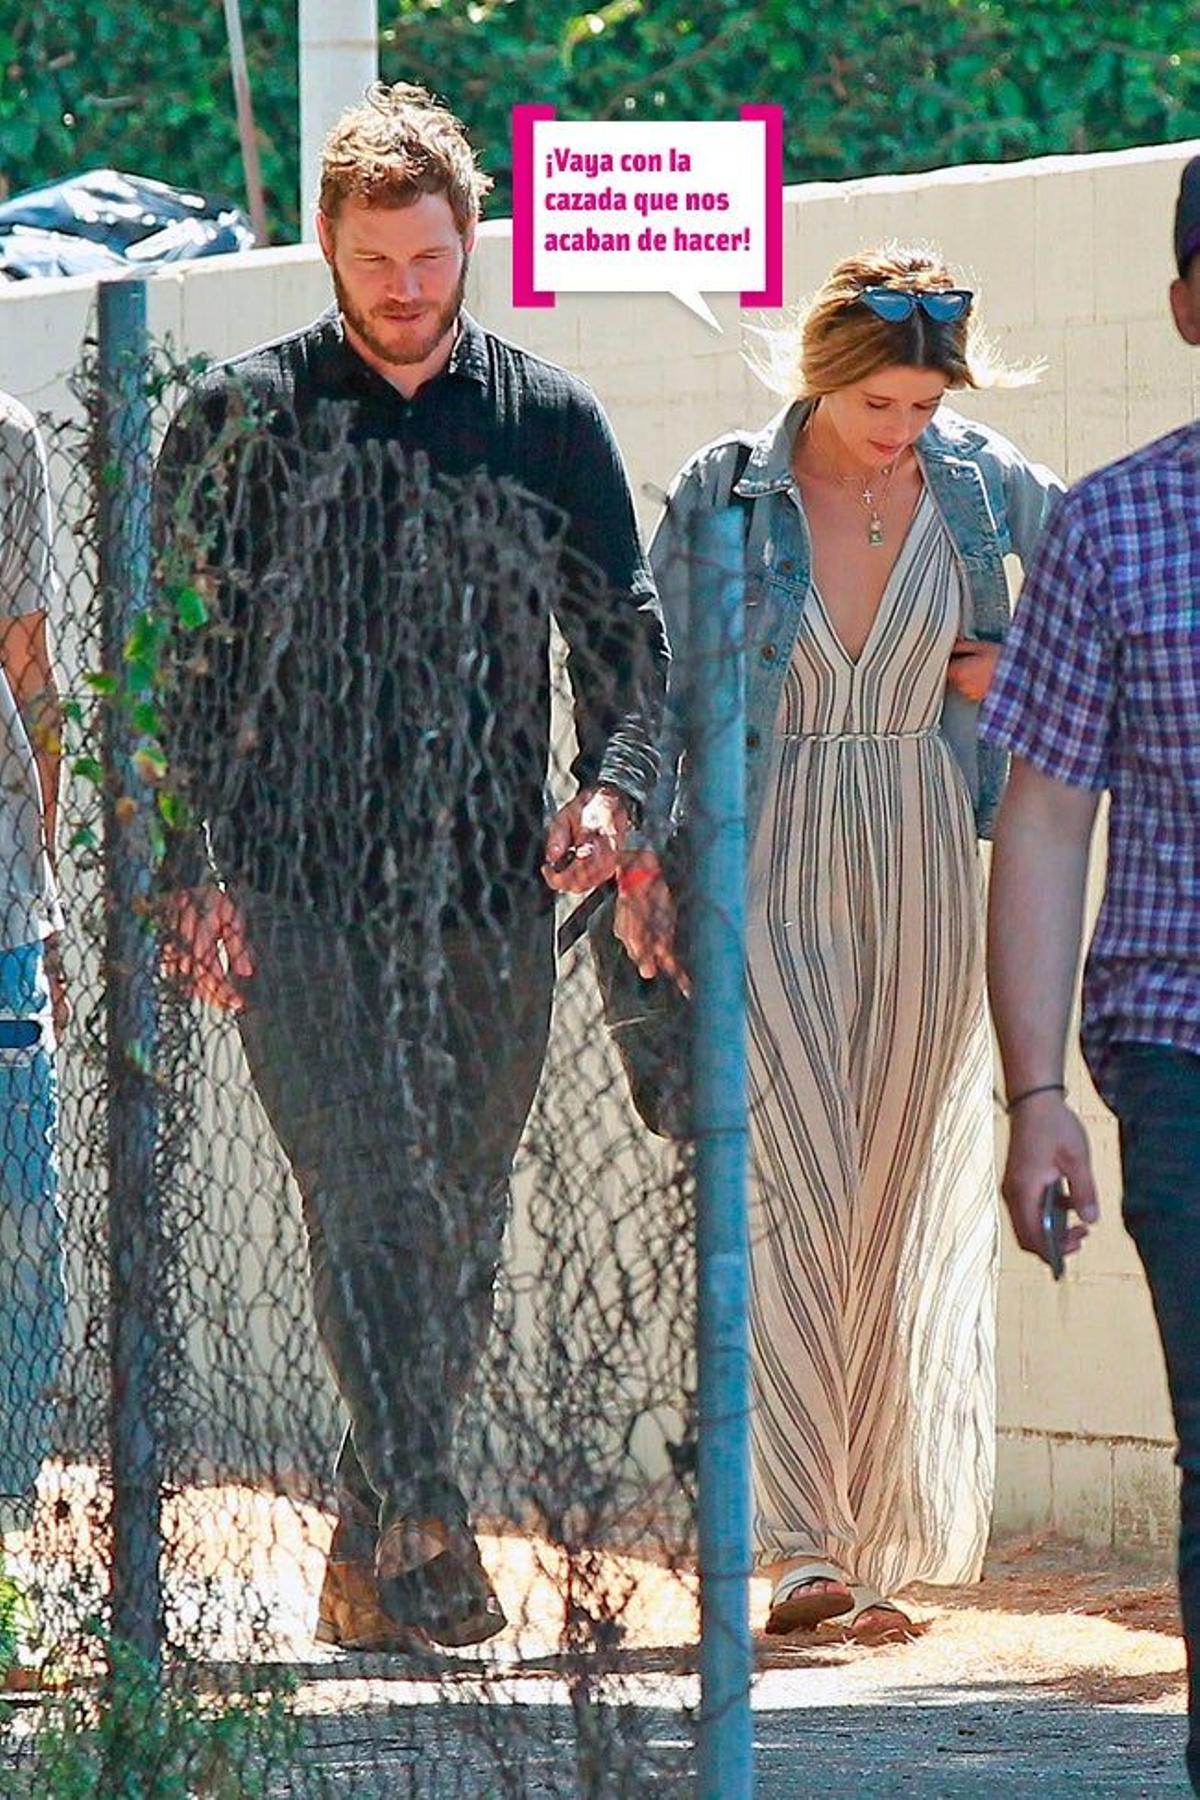 Por fin podemos ver a Chris Pratt con su novia Katherine